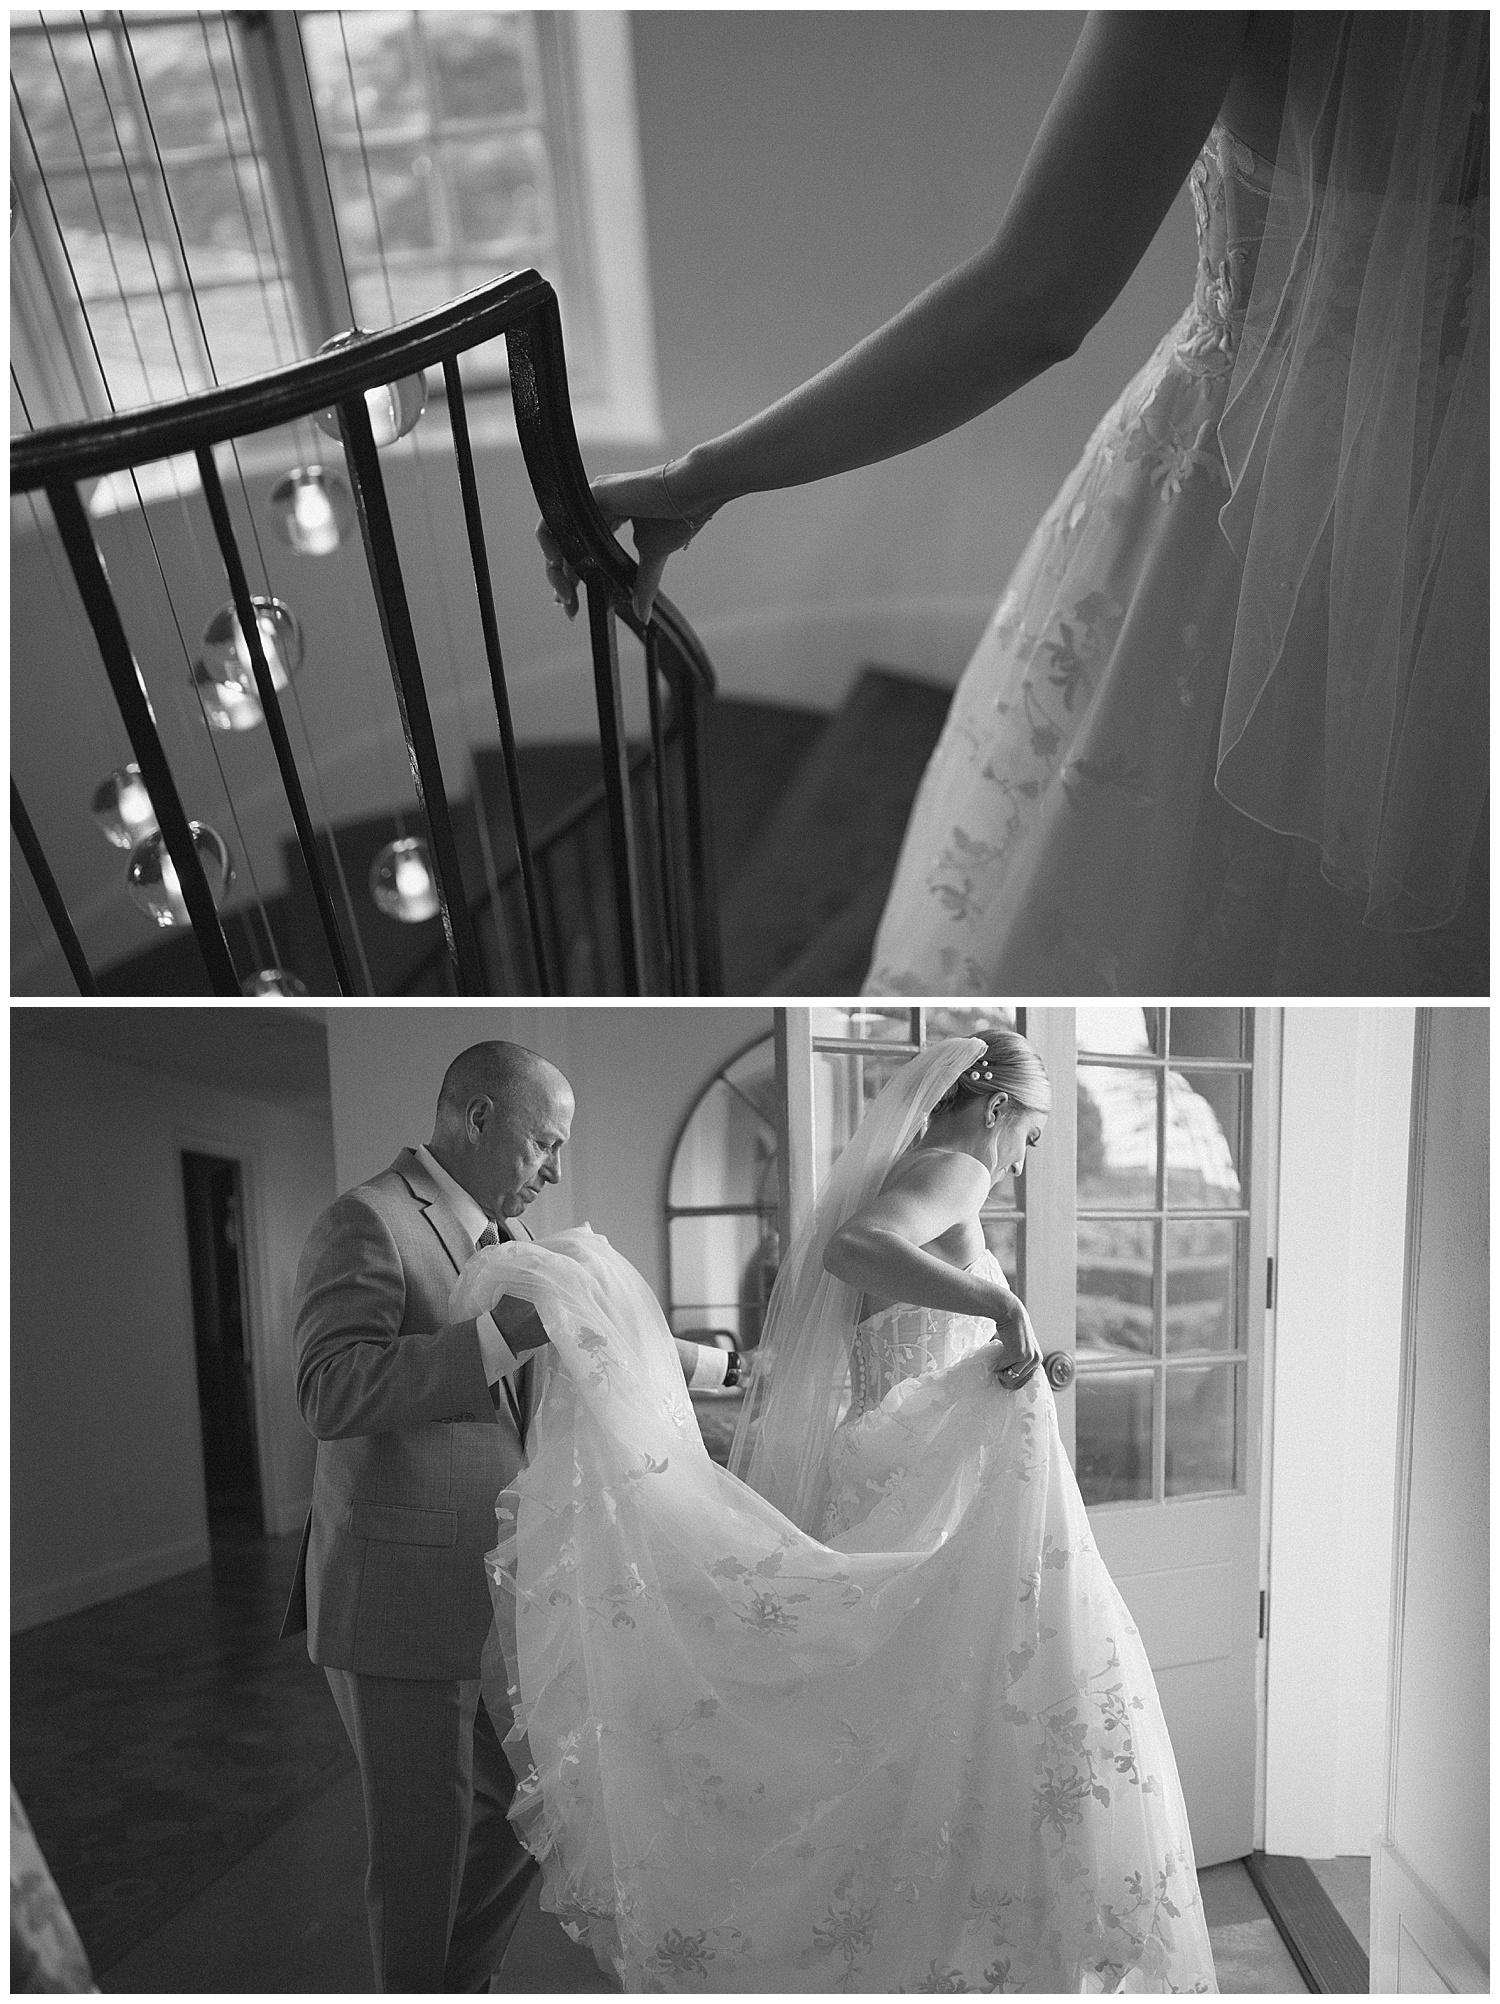 Documentary Style Wedding Photographer Based in Rhode Island